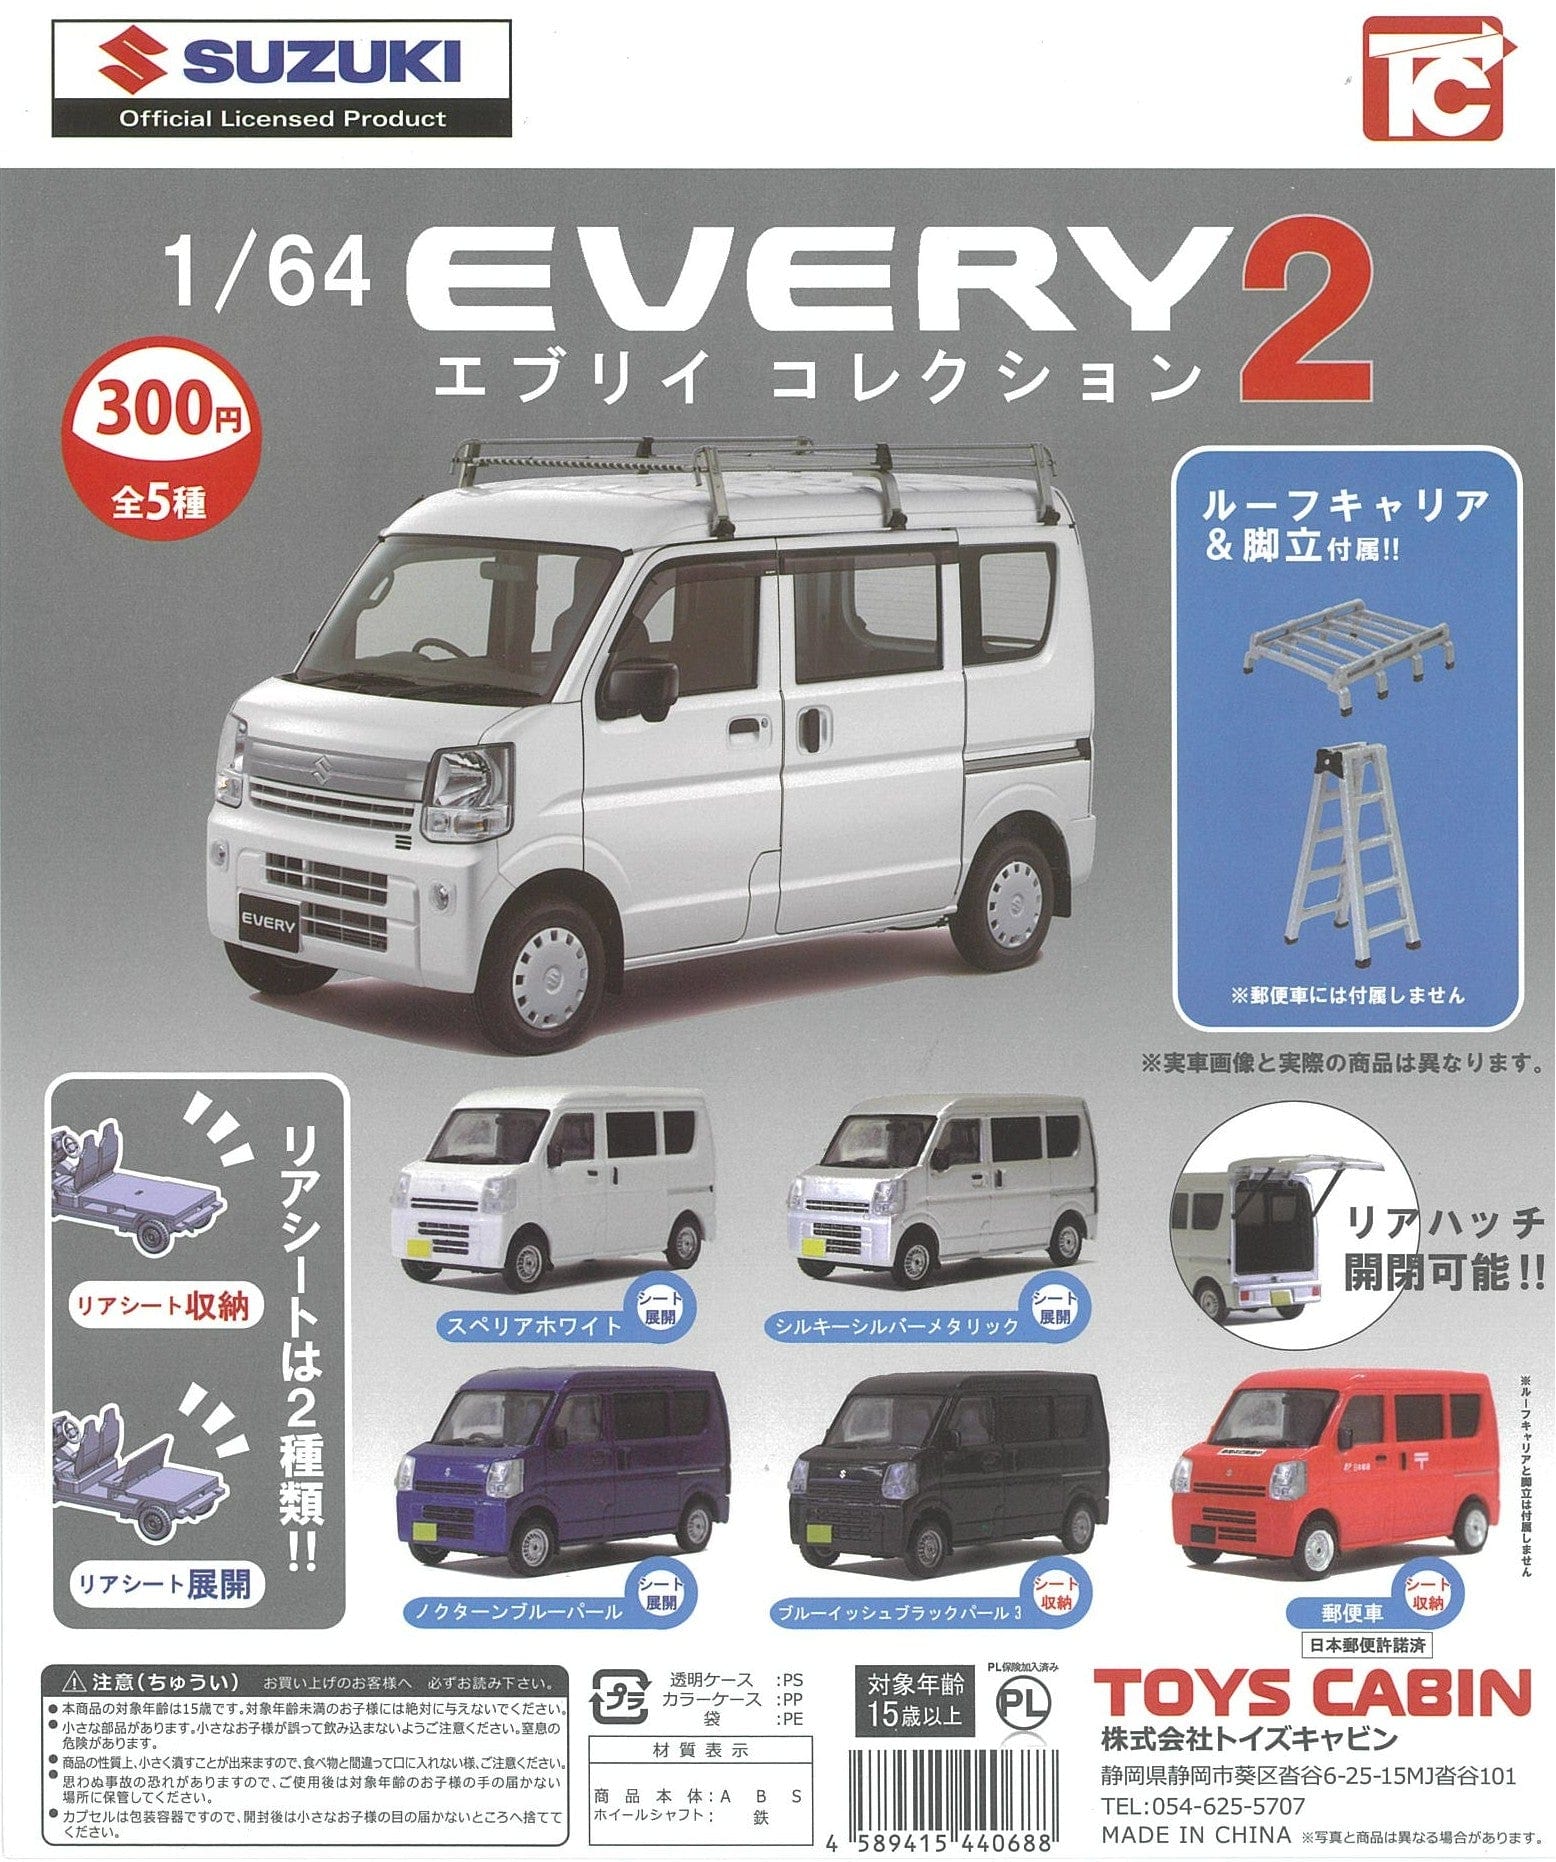 Toys Cabin CP1523 1/64 Suzuki Every Collection 2